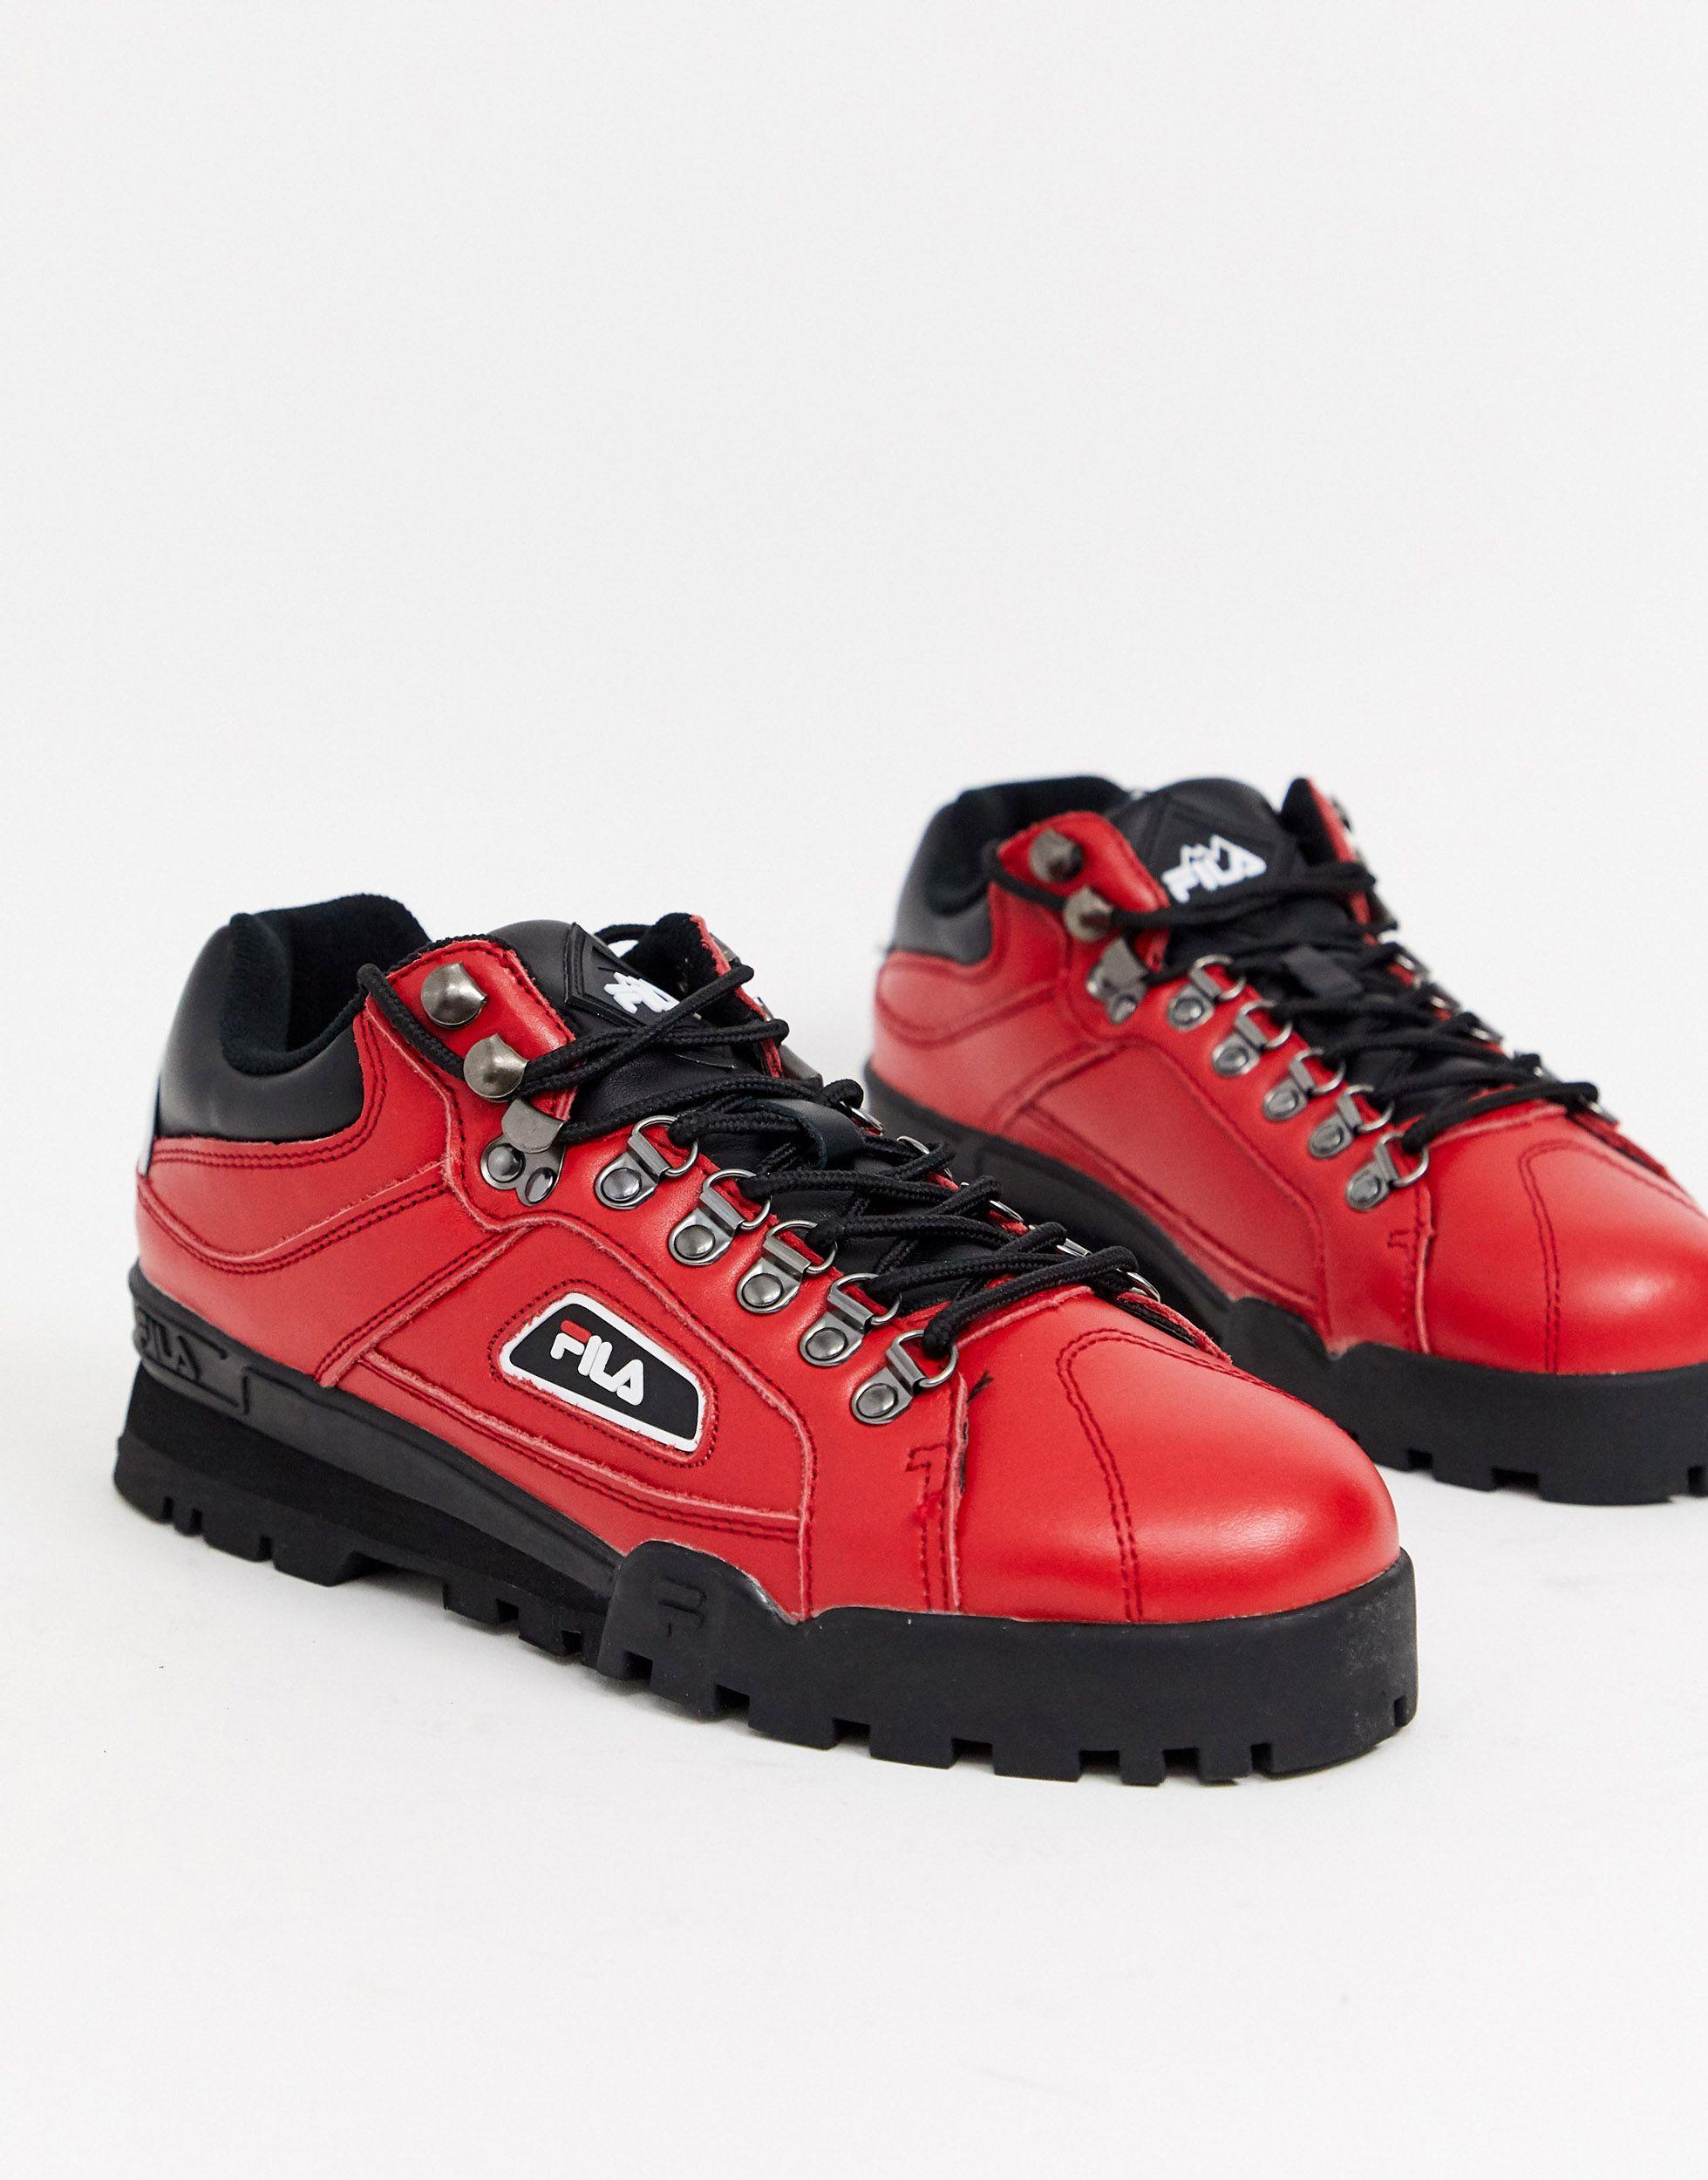 Fila Leather Trailblazer Hiking Sneakers-red for Men - Lyst